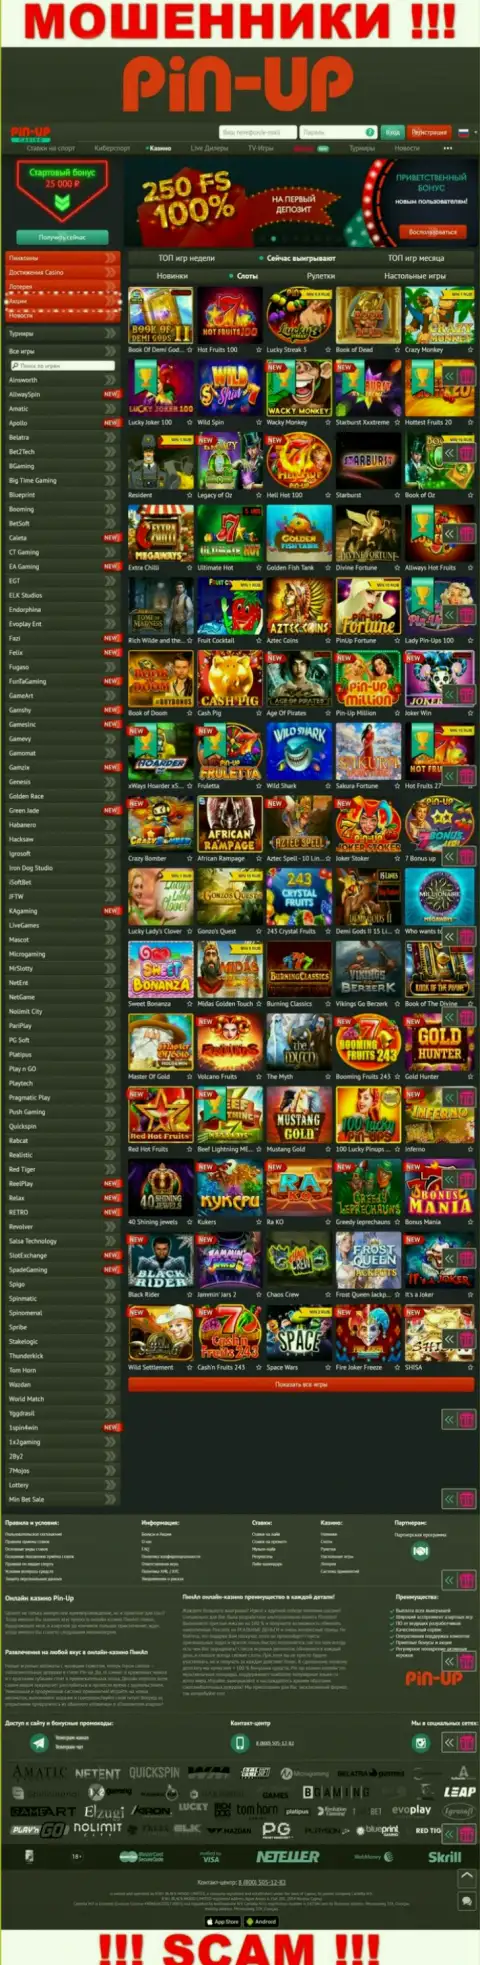 Pin-Up Casino - это официальный сервис жуликов Pin Up Casino